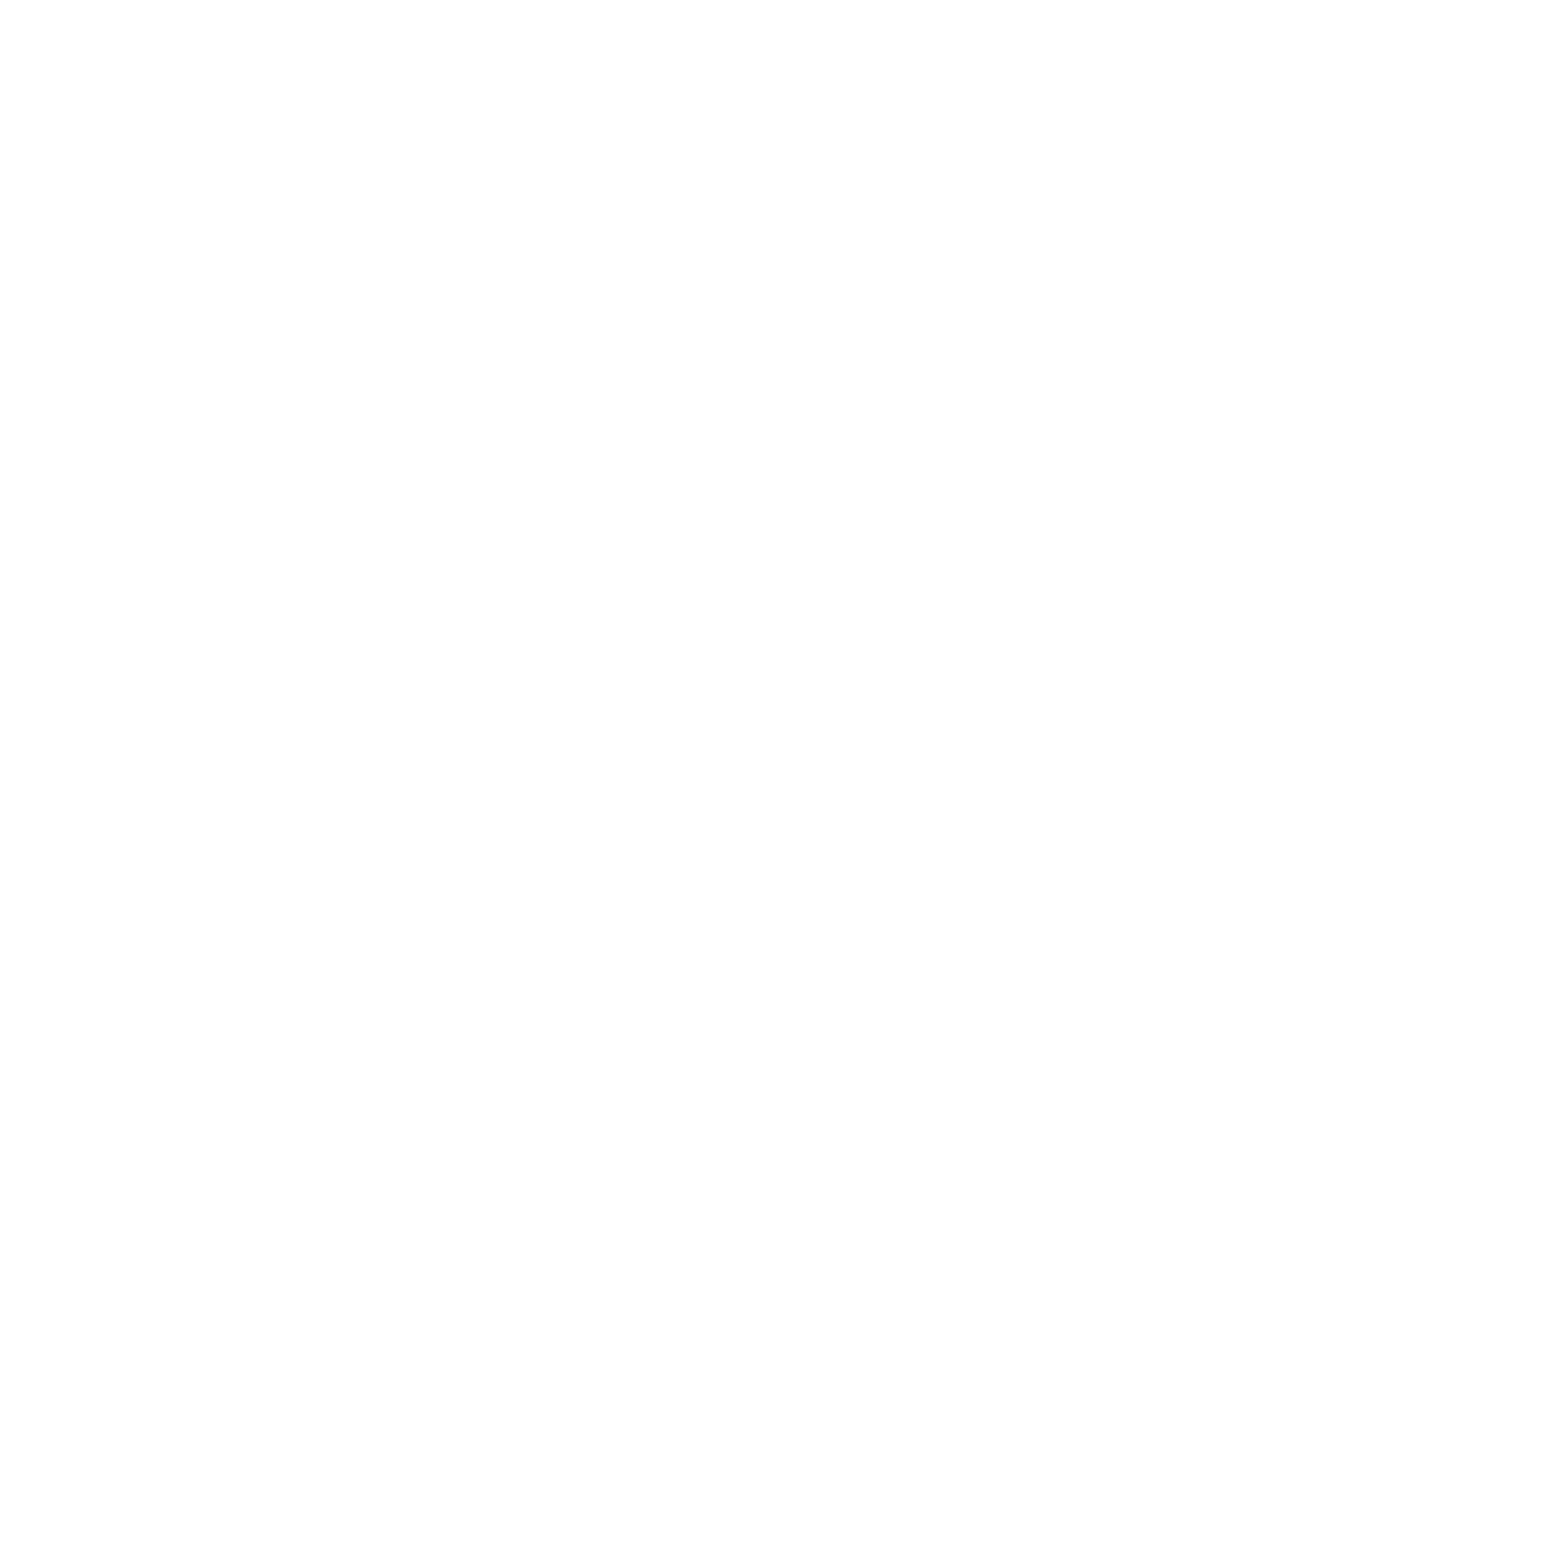 Megacable Holdings logo for dark backgrounds (transparent PNG)